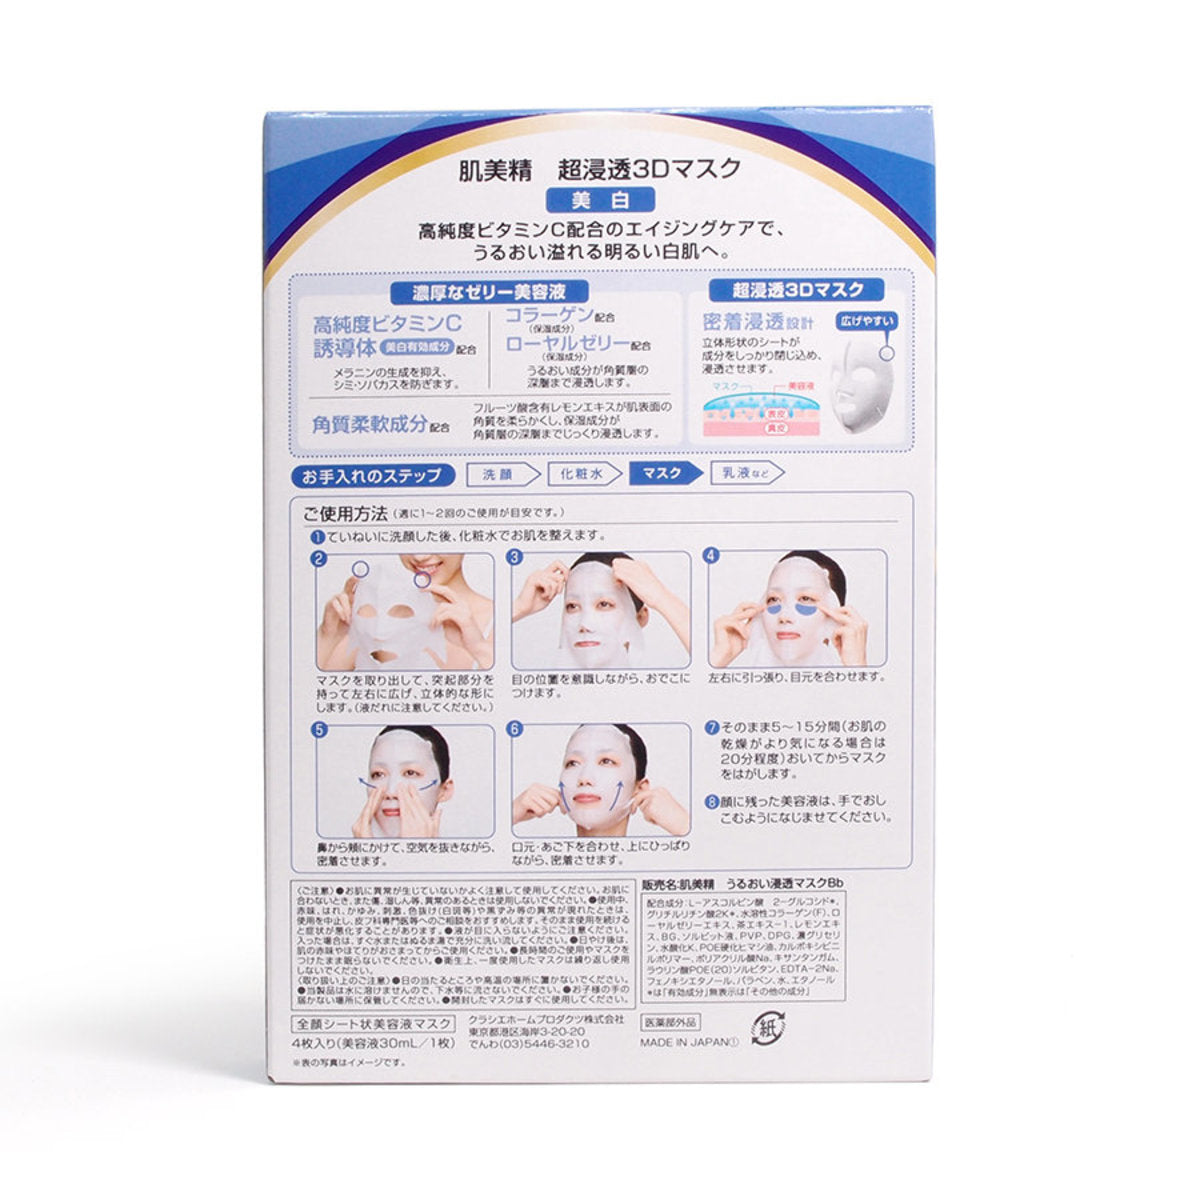 KRACIE Hadabisei 3D Face Mask (Aging-care Brightening)